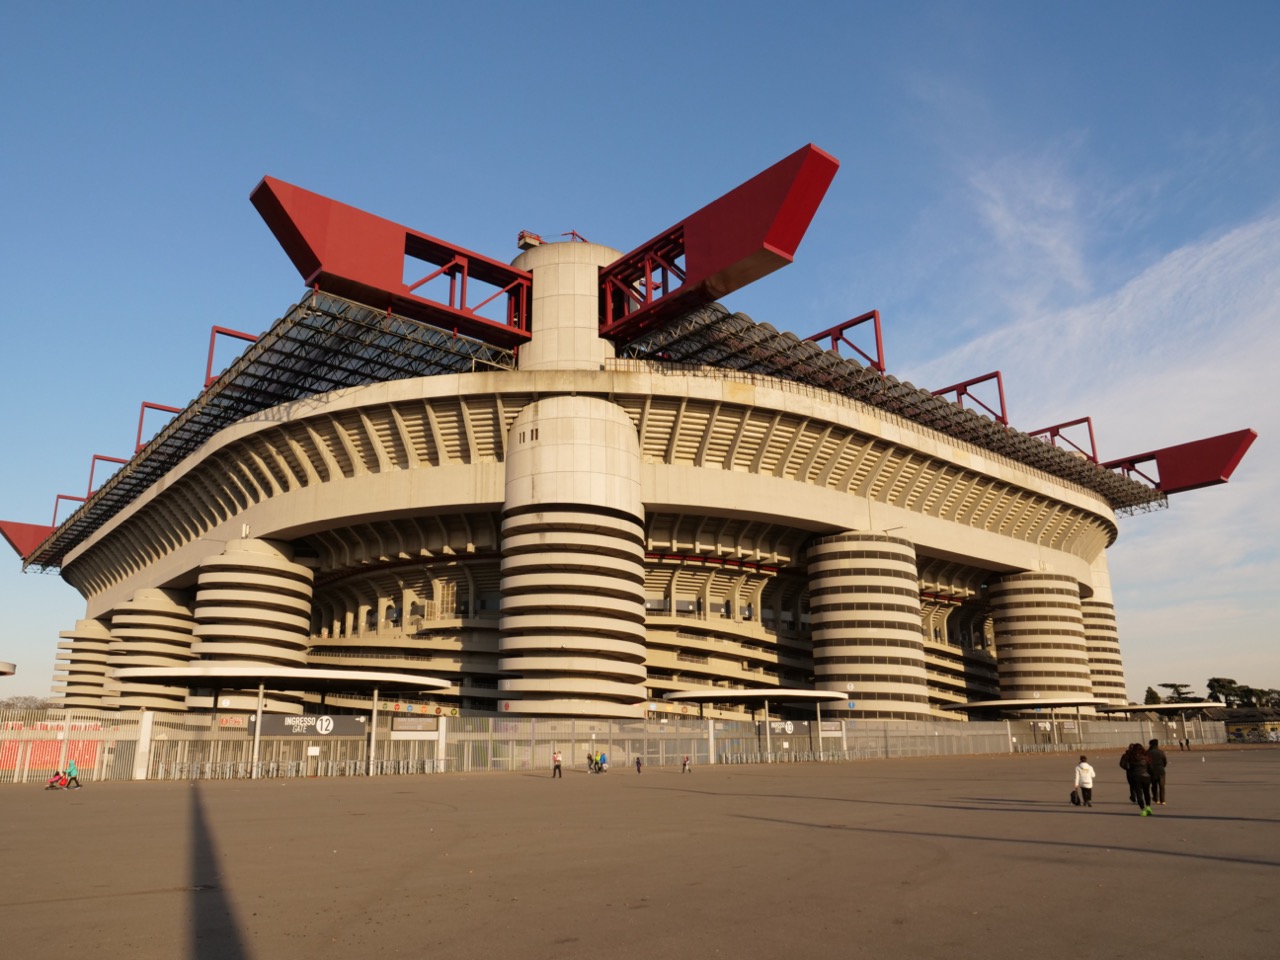 Le grand stade de Milan en hiver